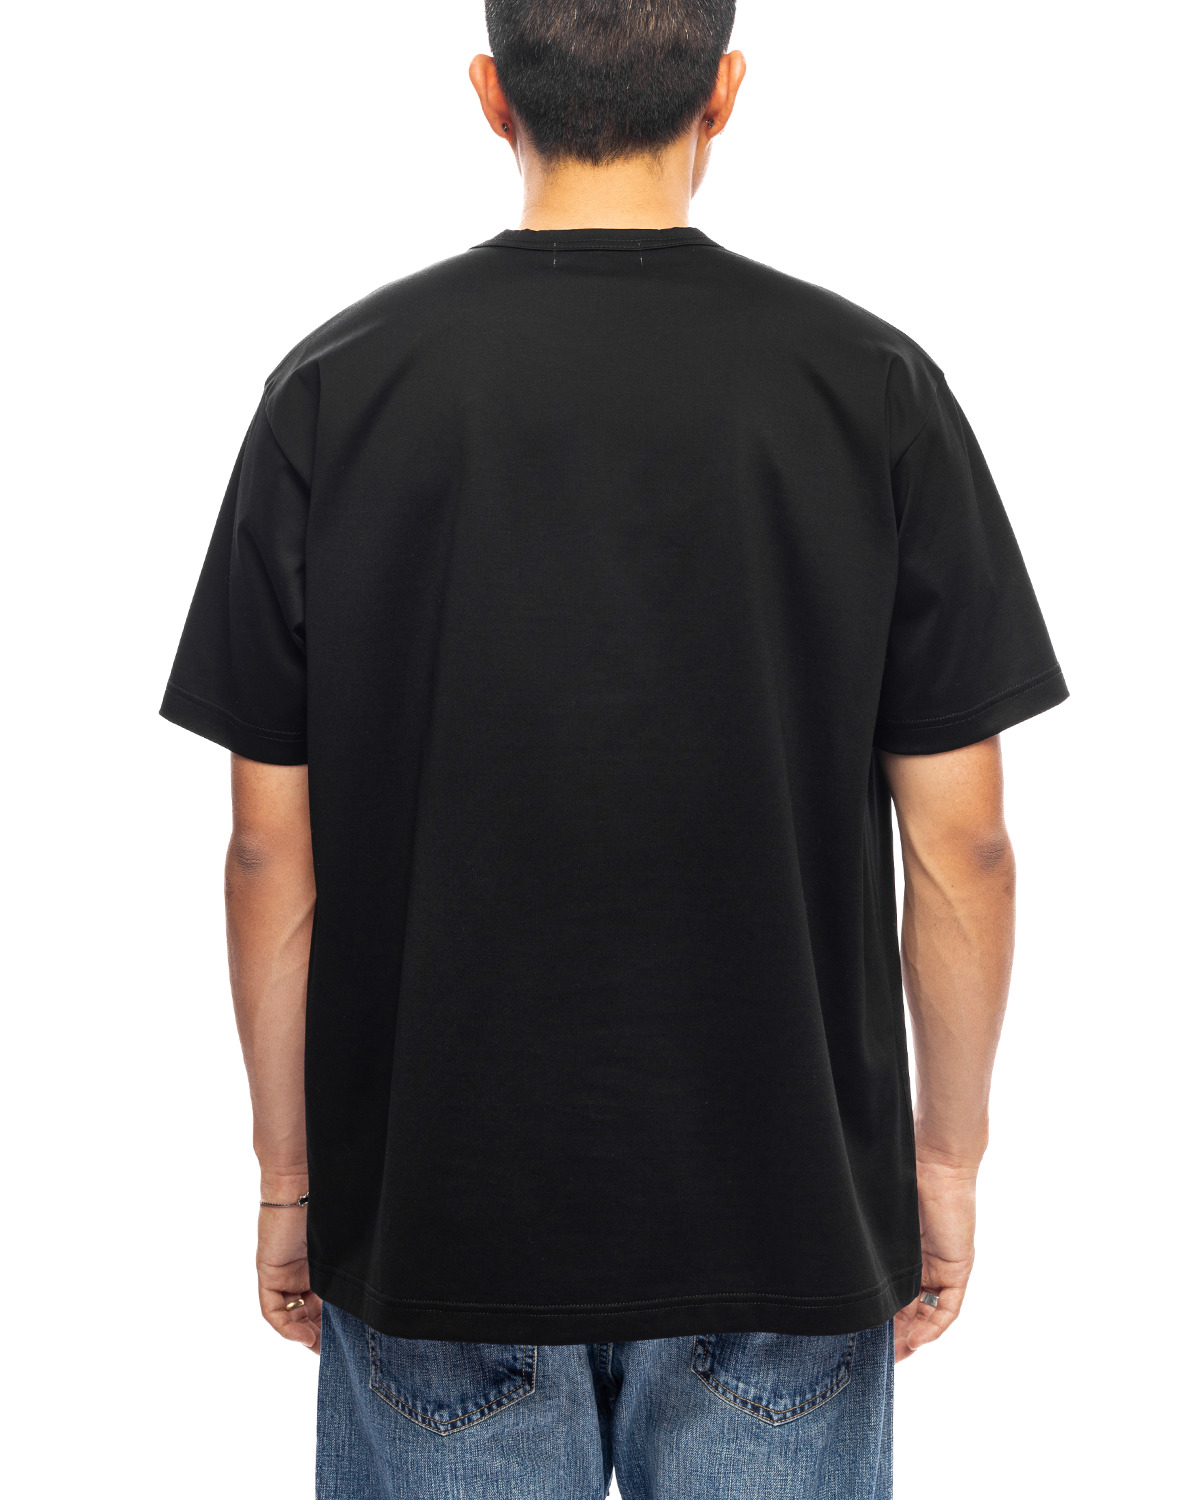 eYe Graphic T Shirt Black - 3